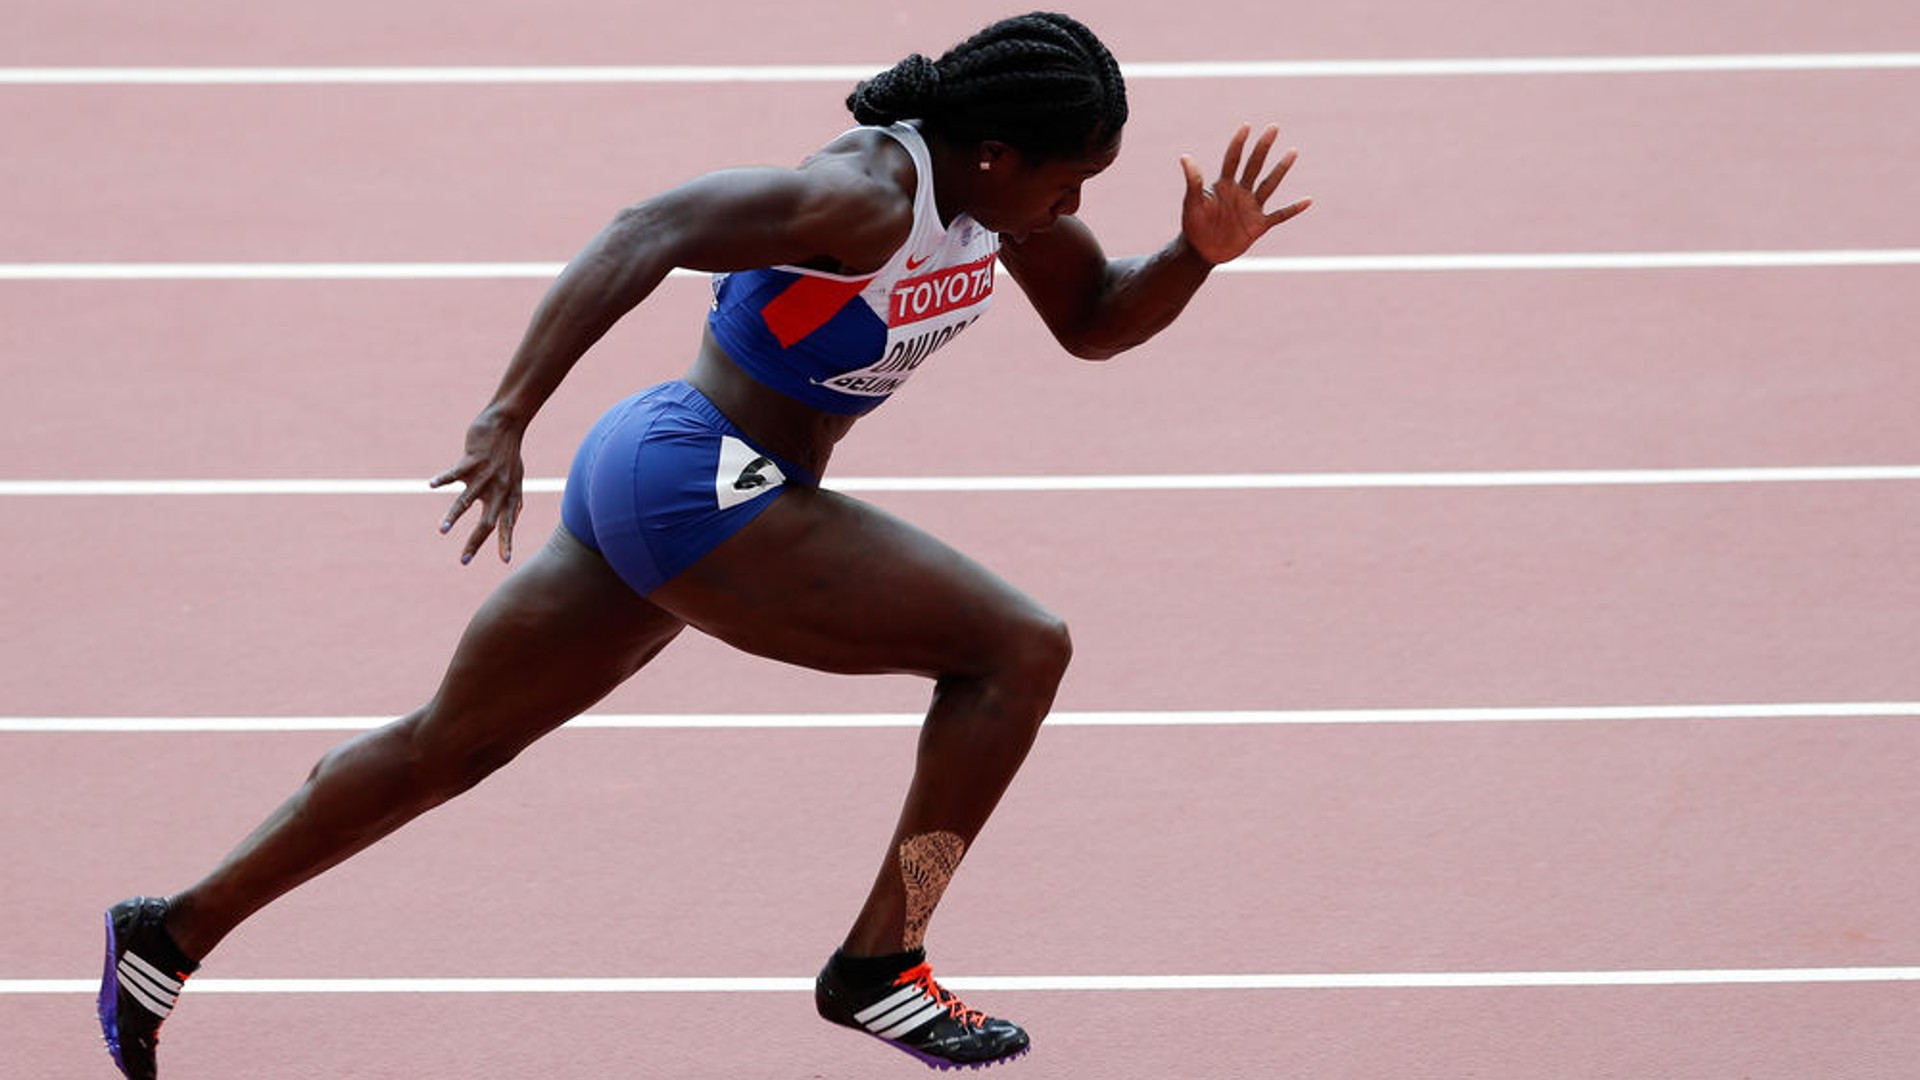 Olympian Anyika Onuora running on an athletics track